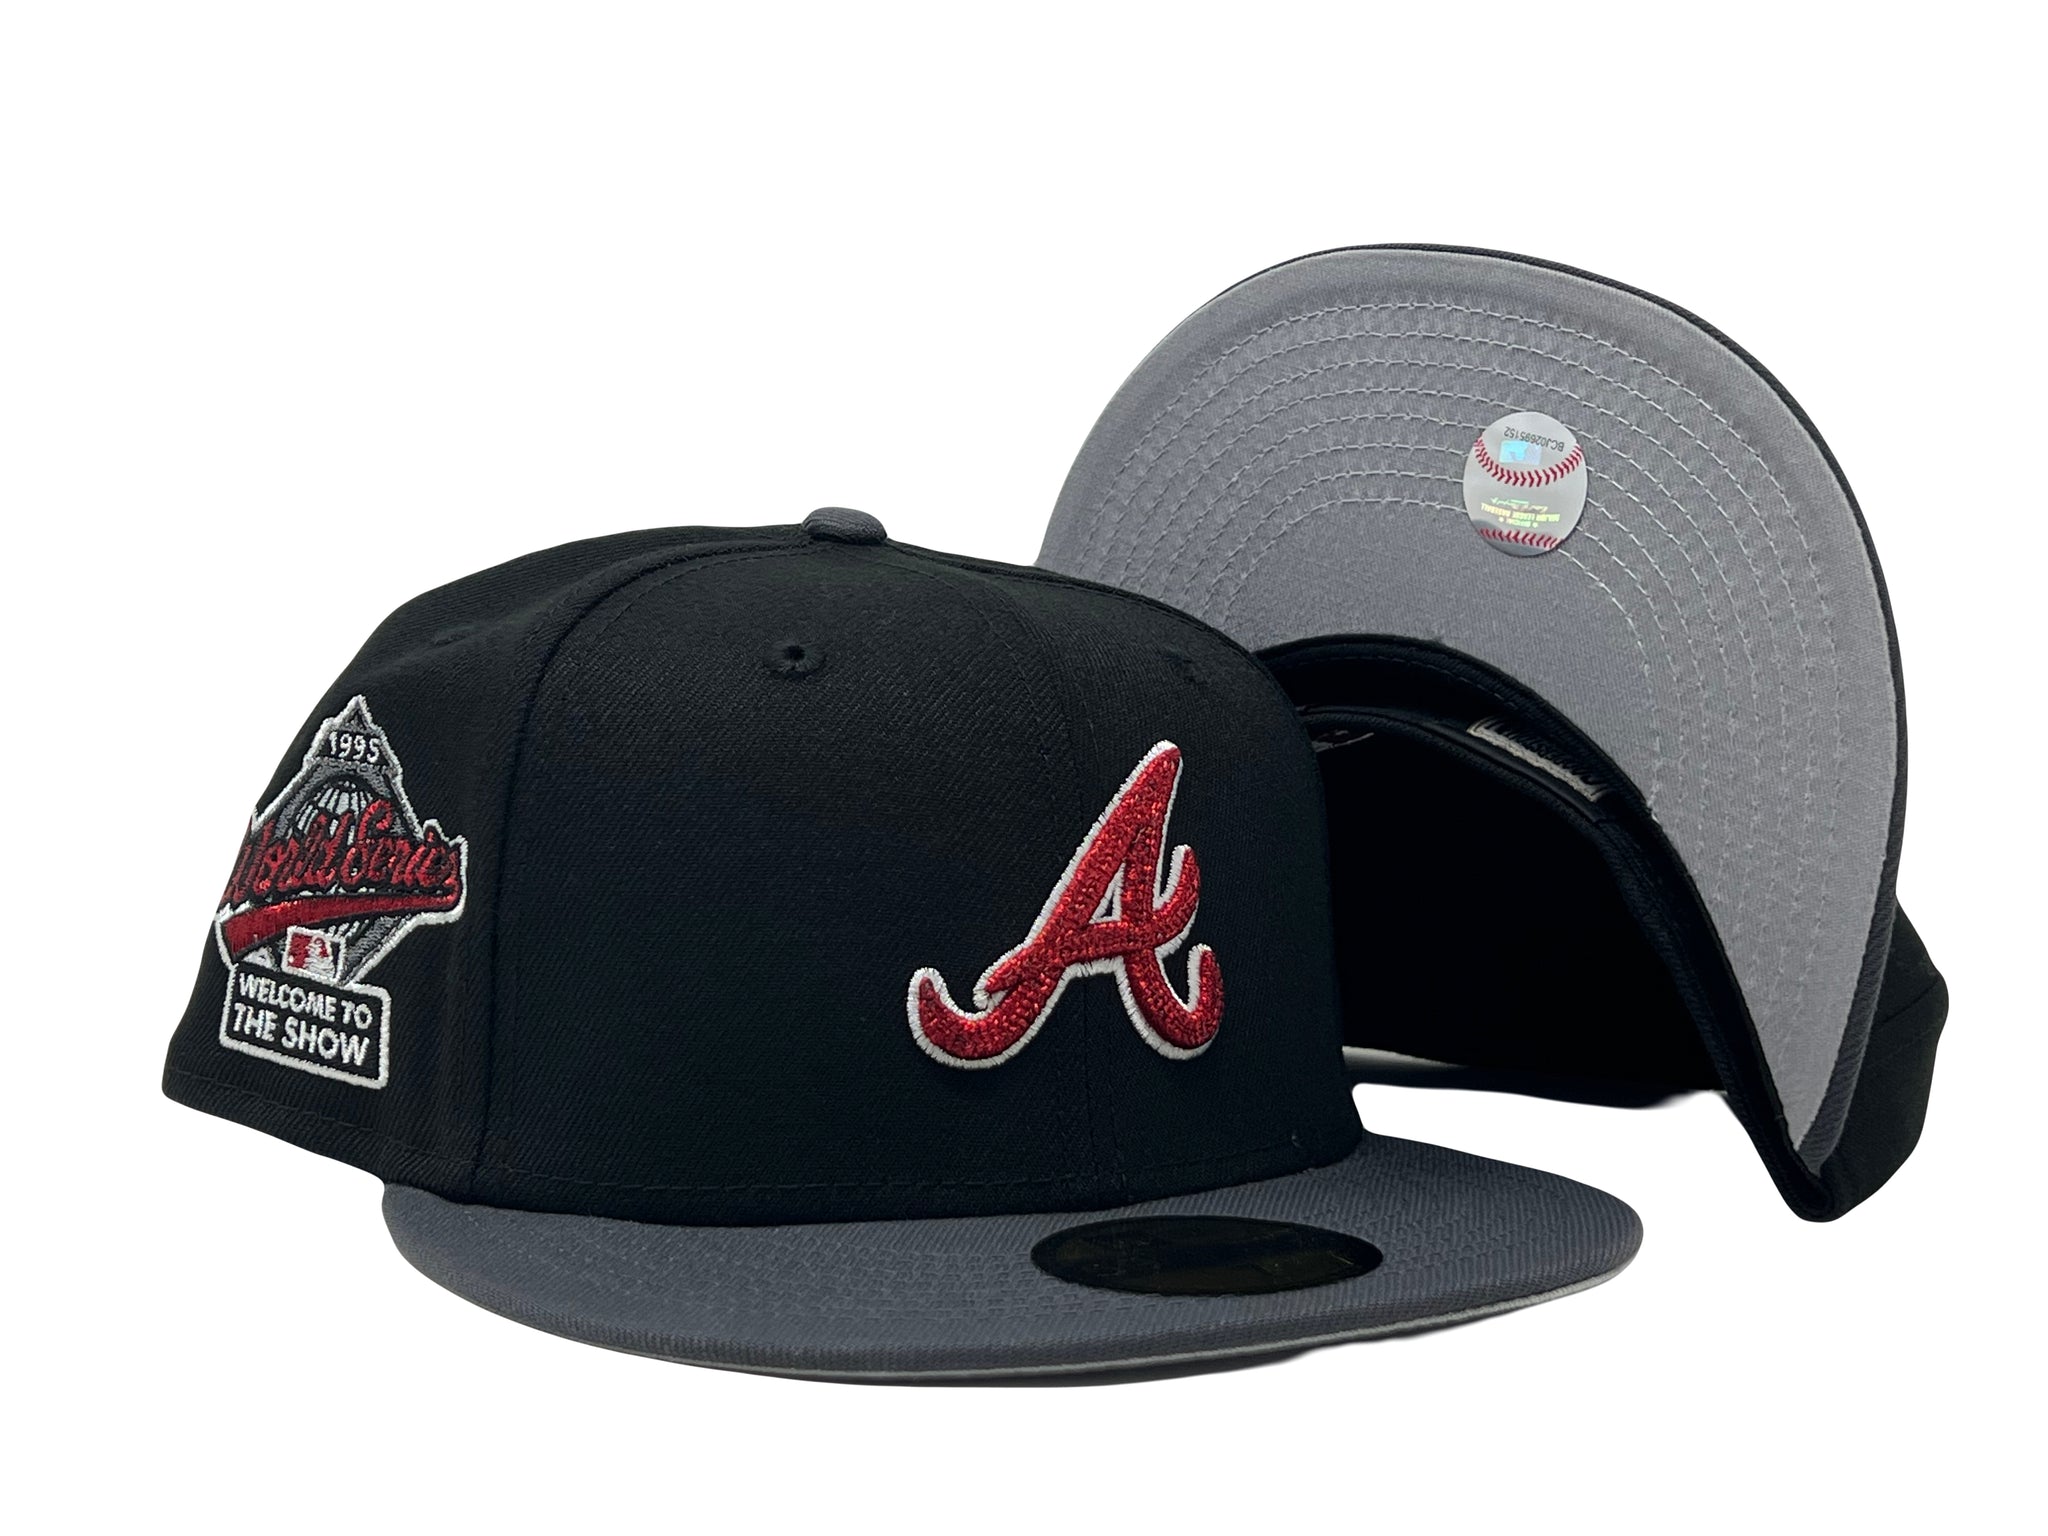 Official Atlanta Braves Hats, Braves Cap, Braves Hats, Beanies